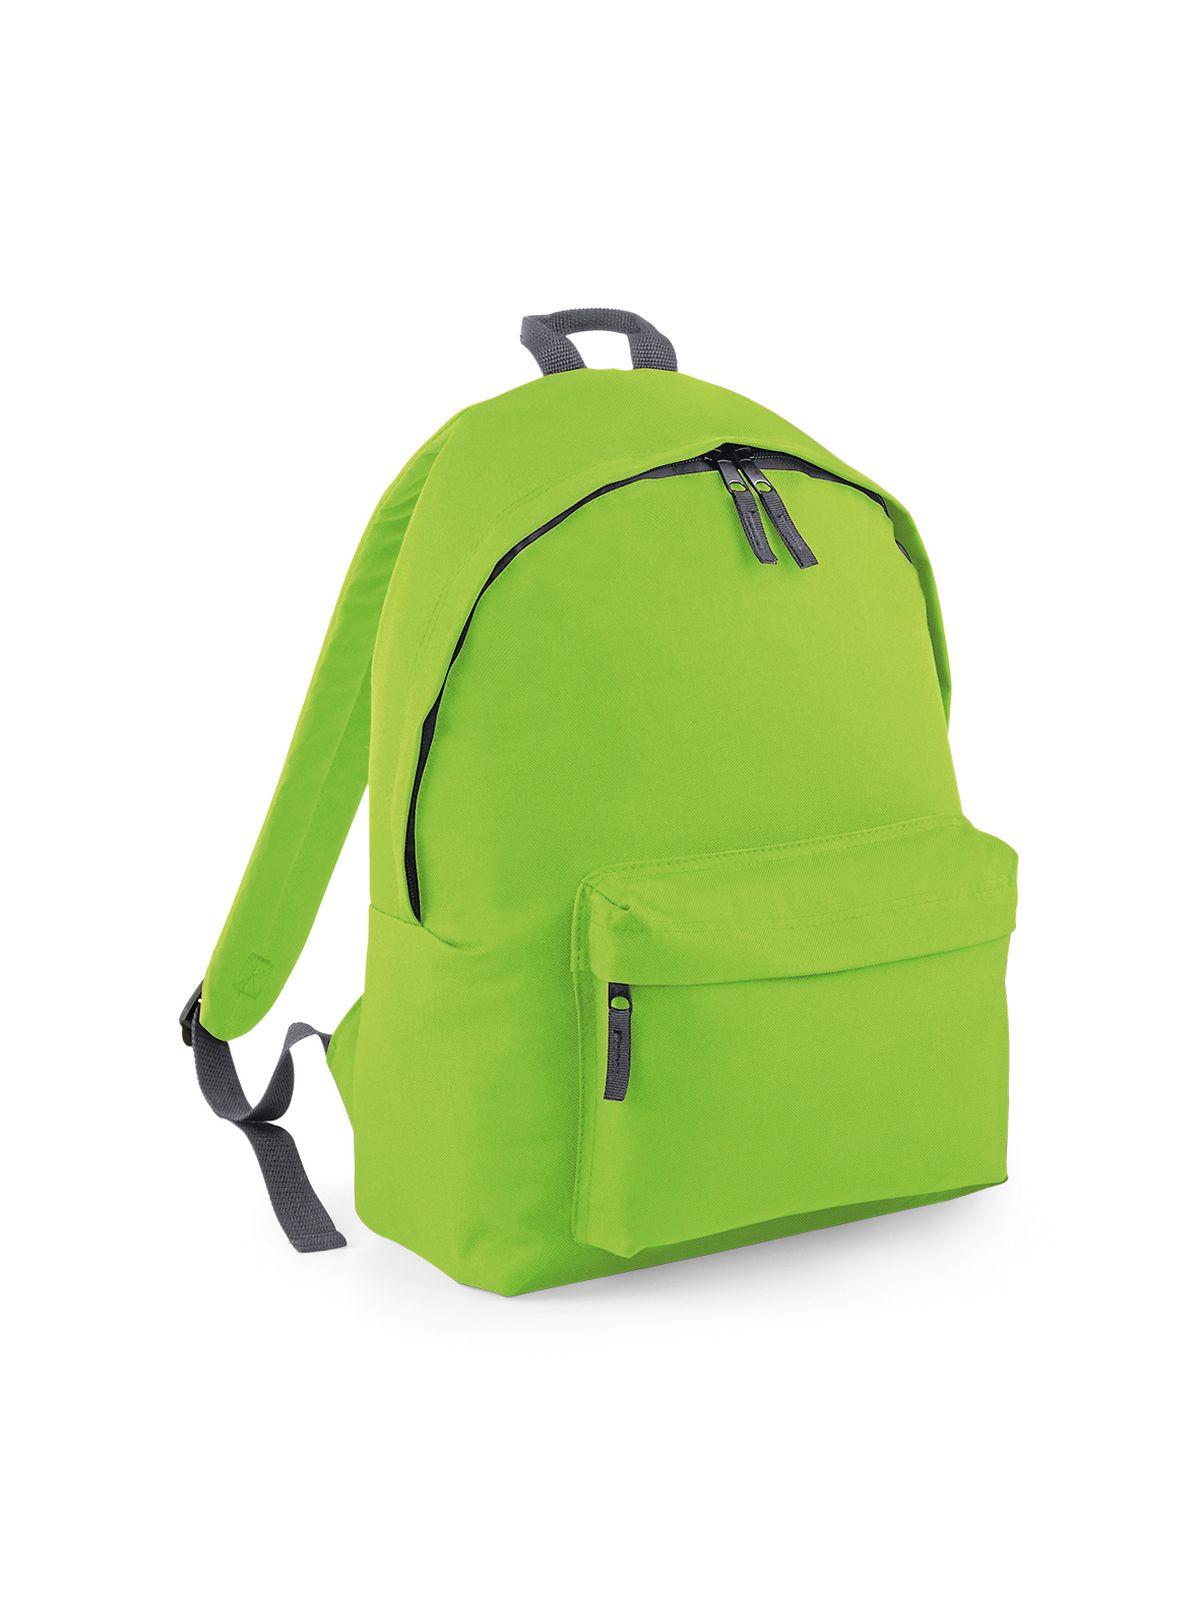 junior-fashion-backpack-lime-green-graphite-grey.webp